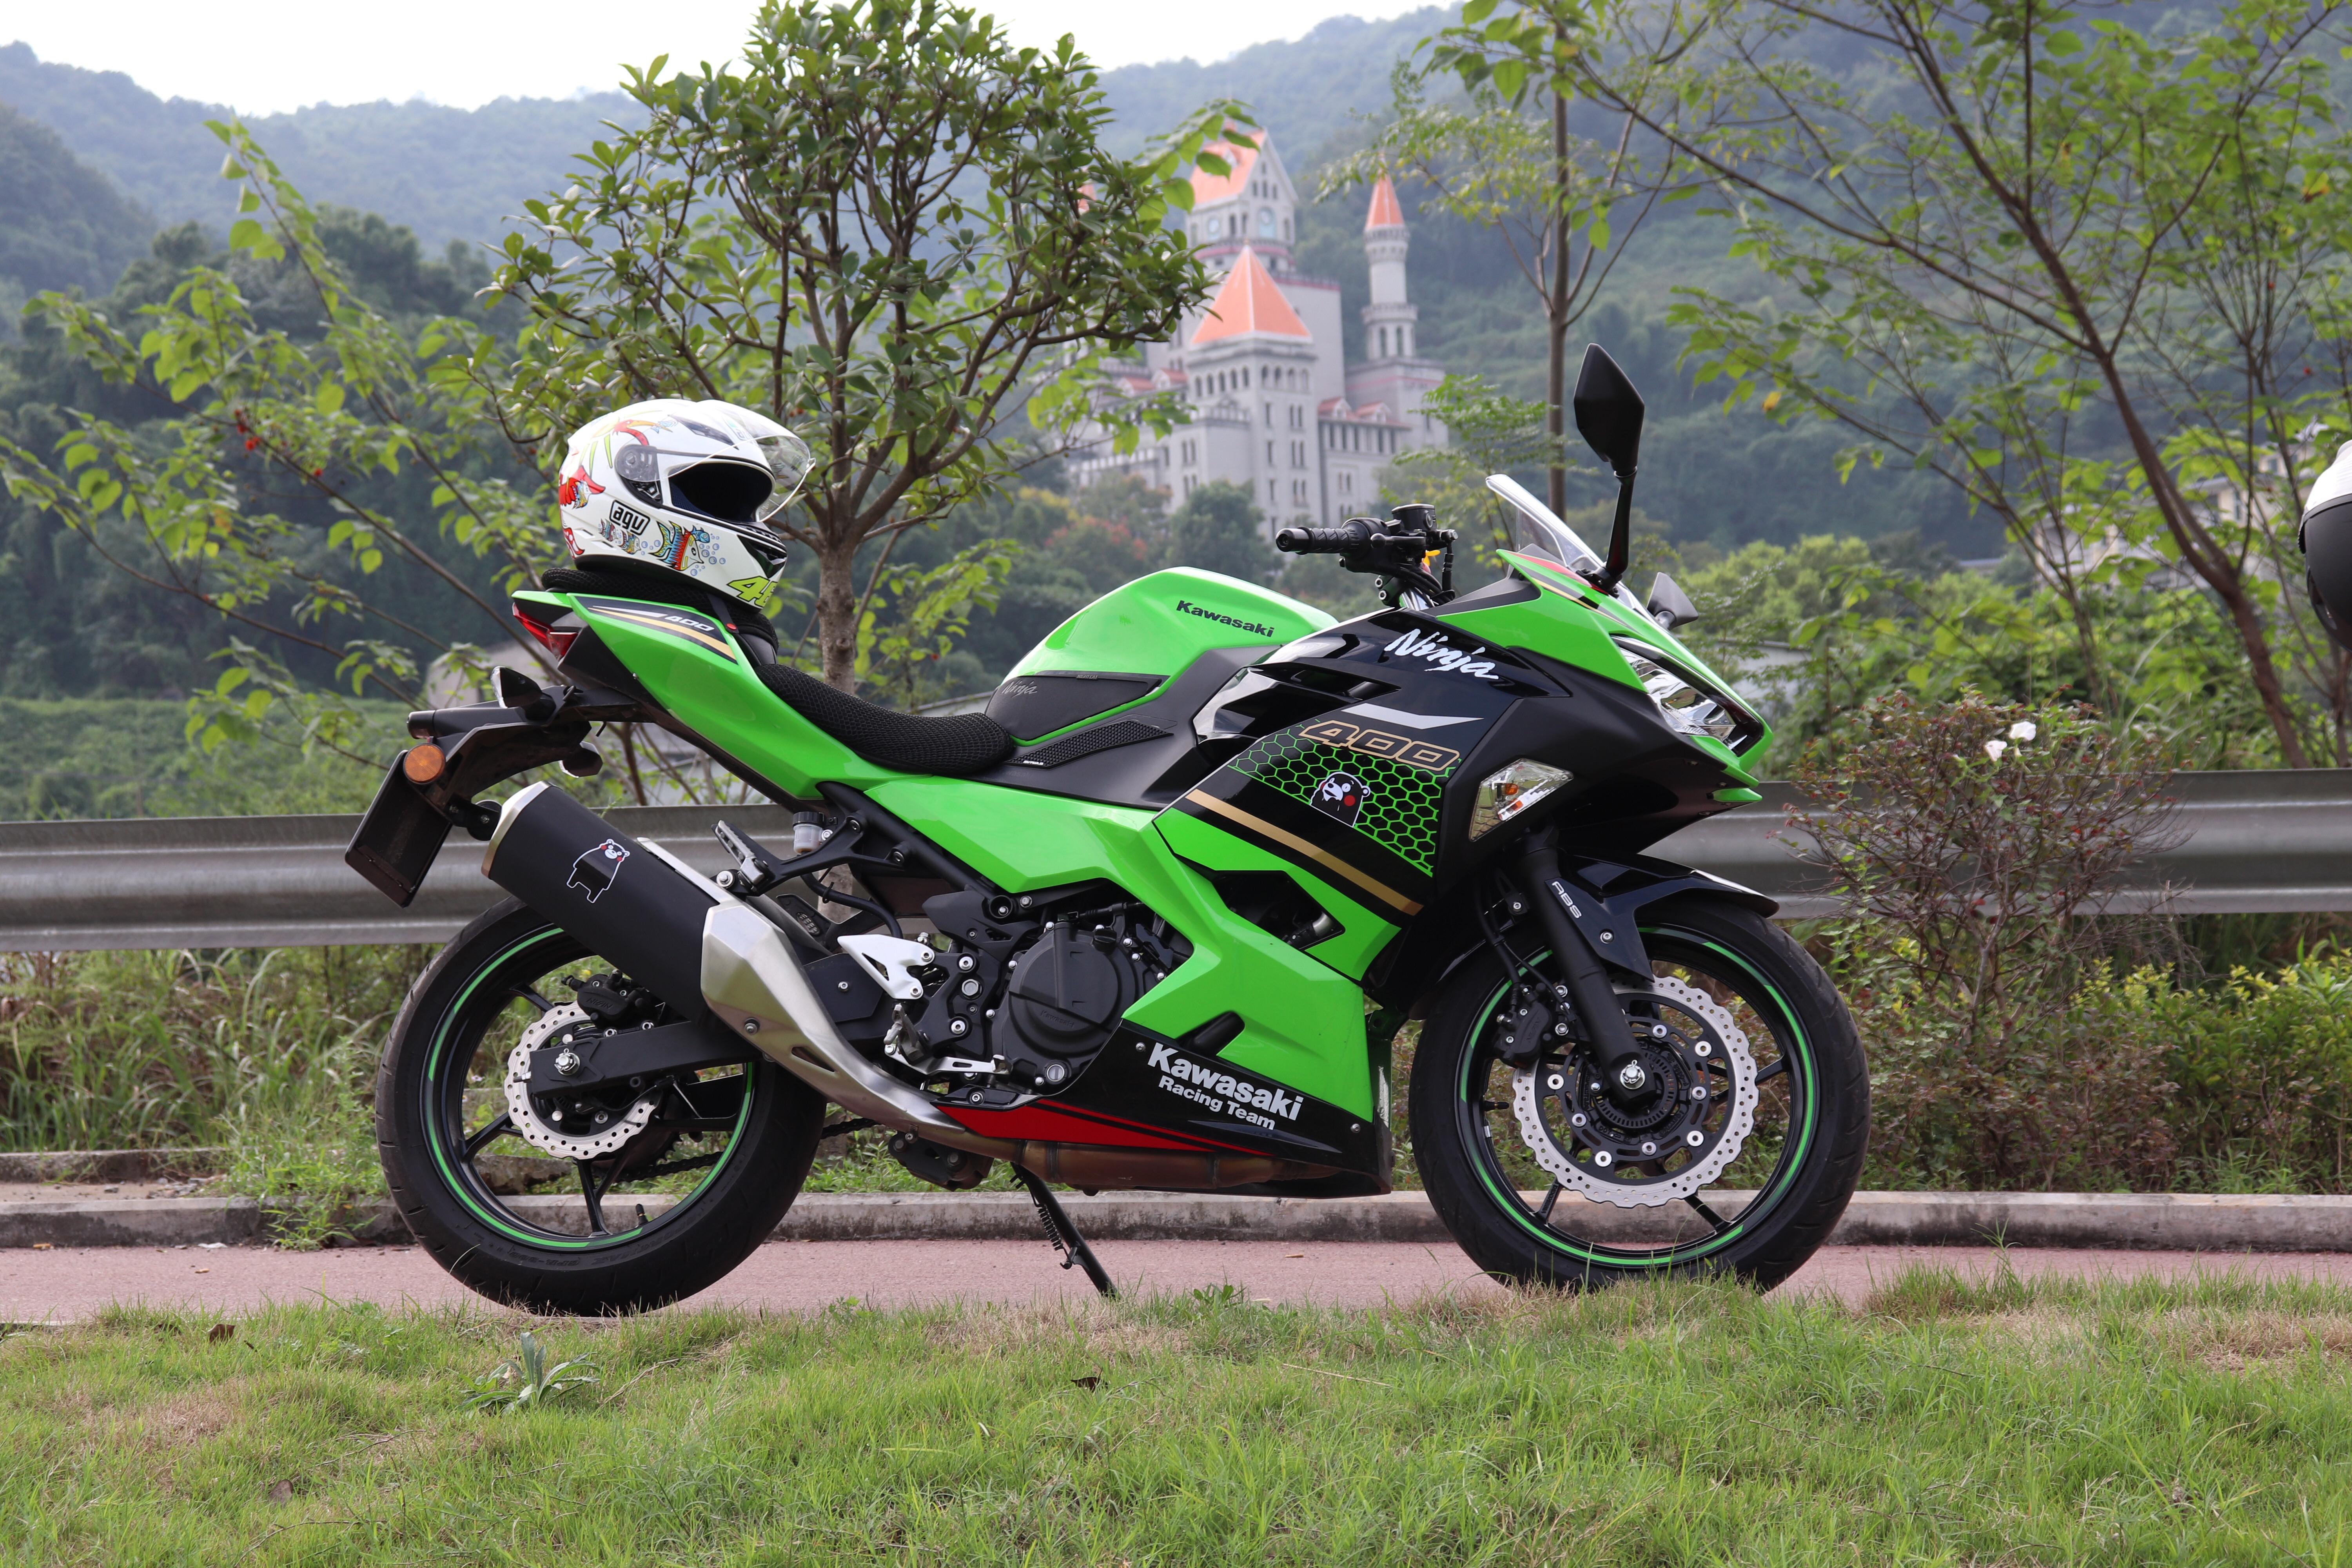 2020 Kawasaki Ninja 400 Buyer's Guide: Specs & Price